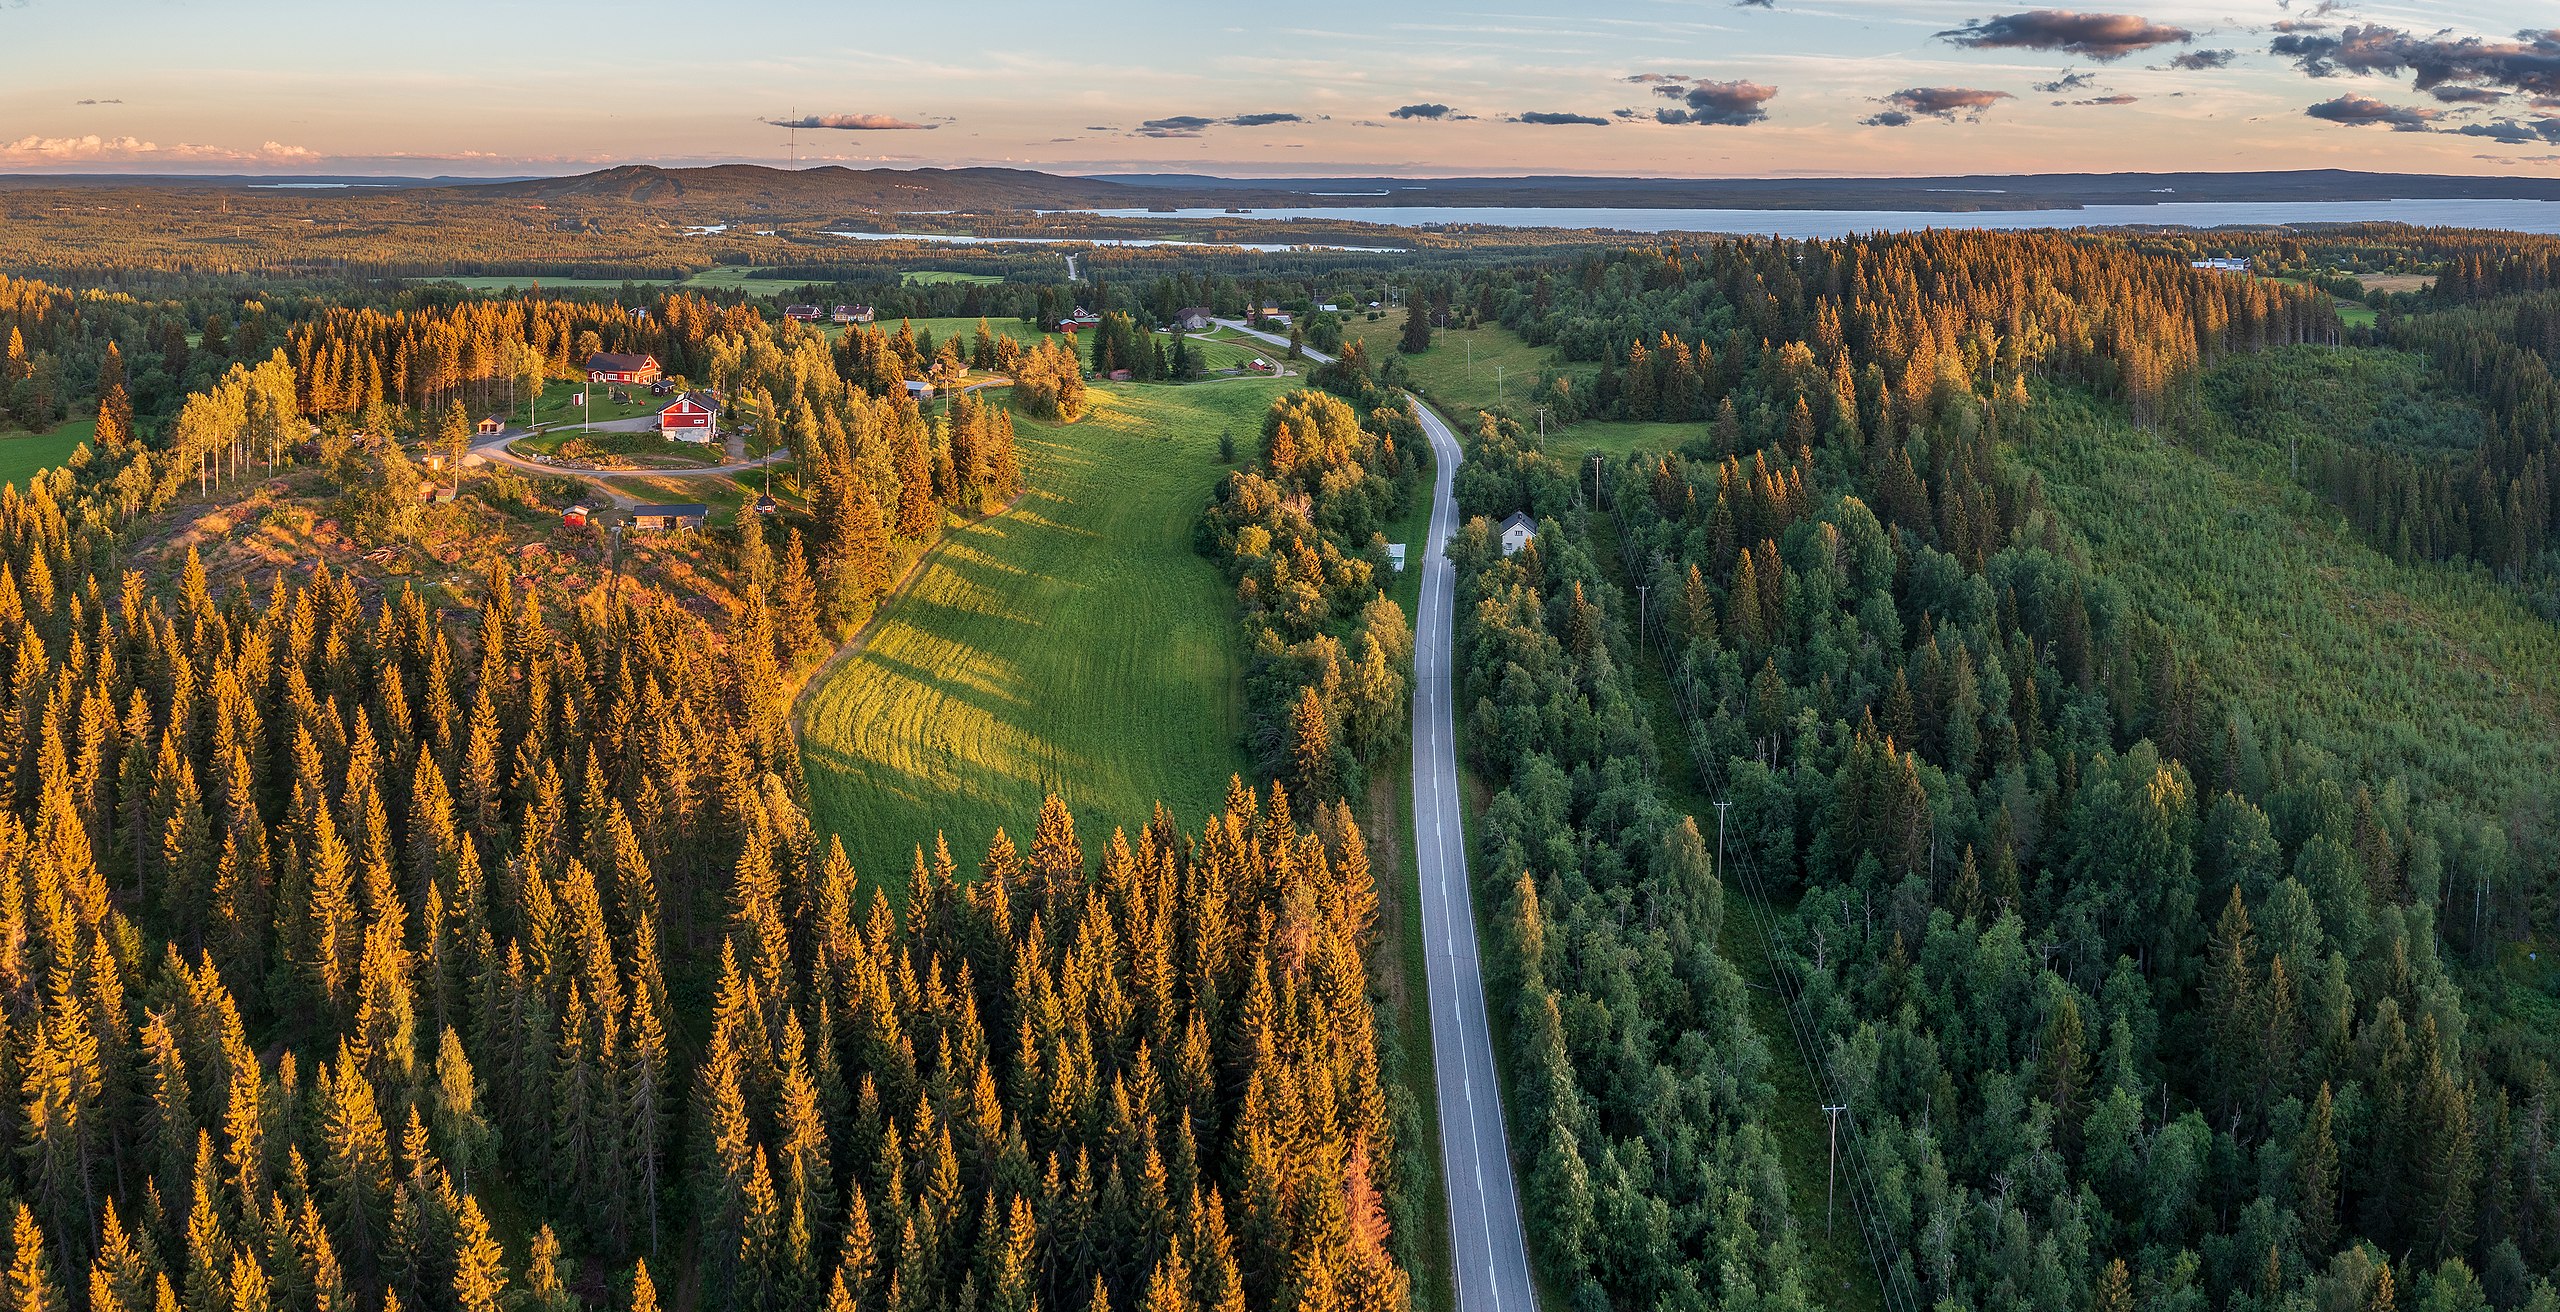 Naapurinvaara in Sotkamo, Kainuu, Finland, 2022 August